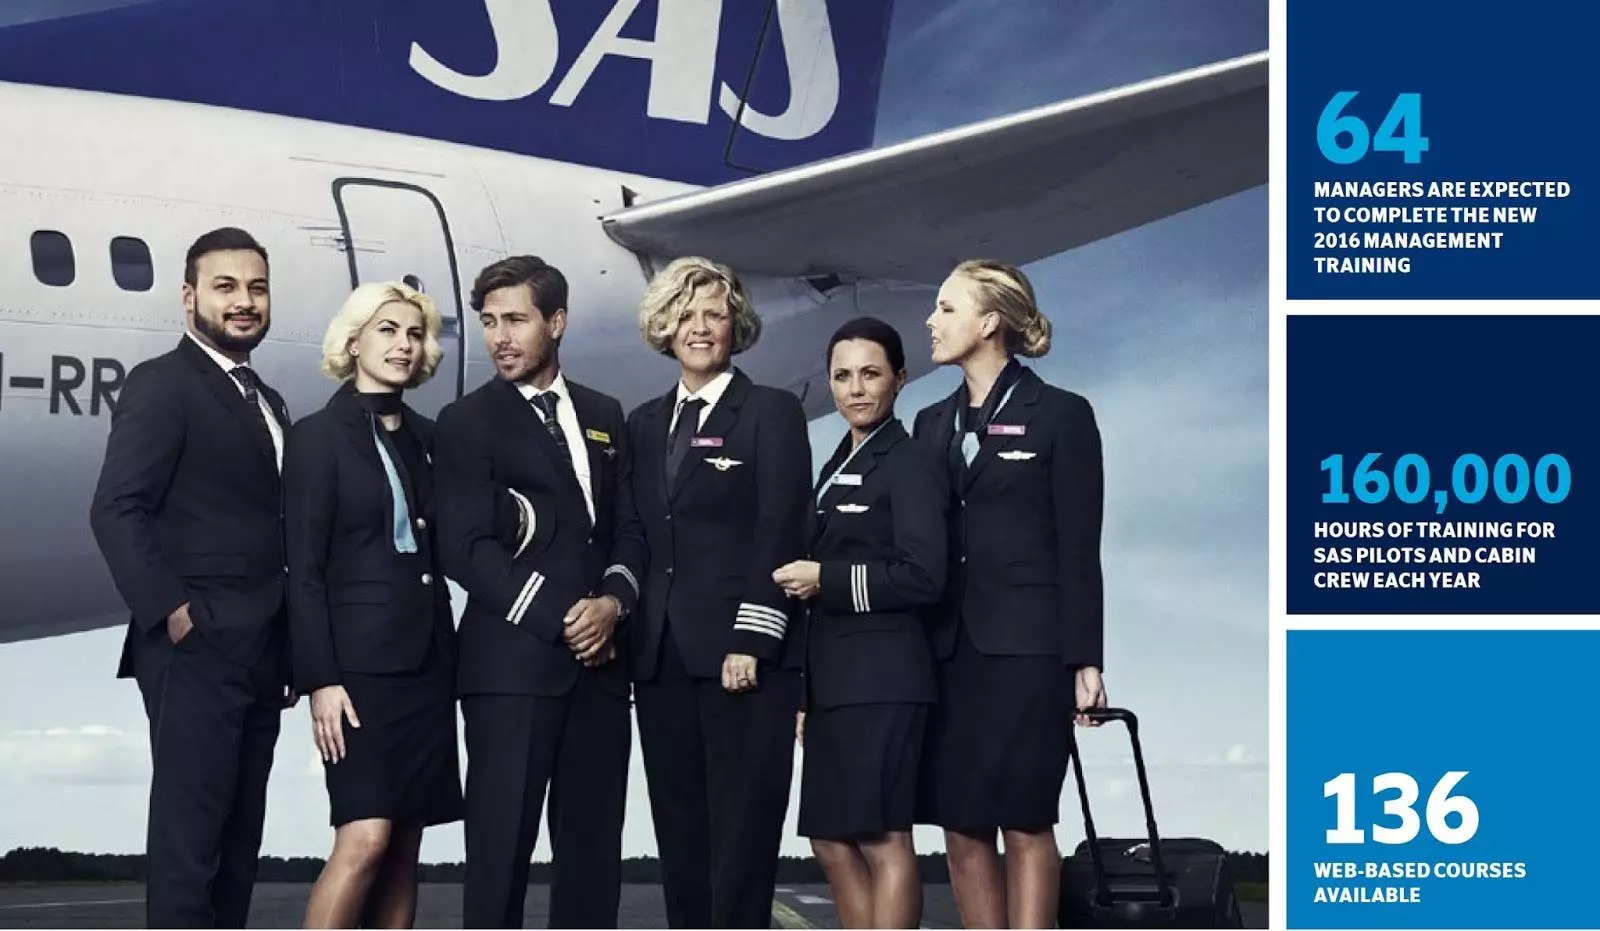 Скандинавские авиалинии  — авиабилеты, сайт, онлайн регистрация, багаж — skandinavian airlines.